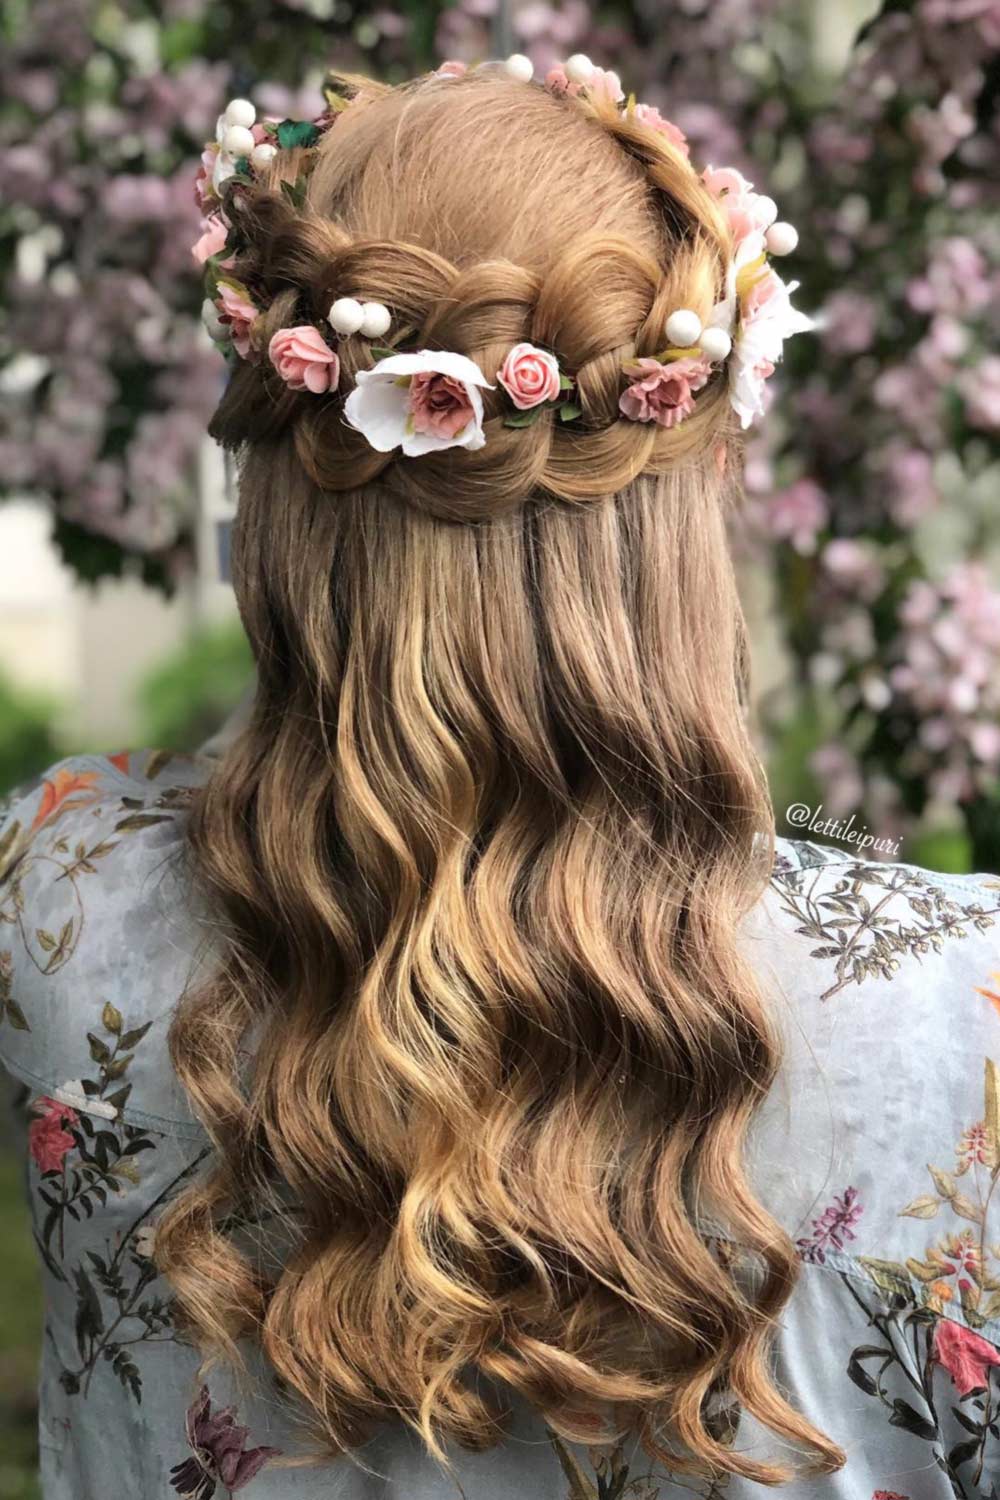 Flowered Braided Crown